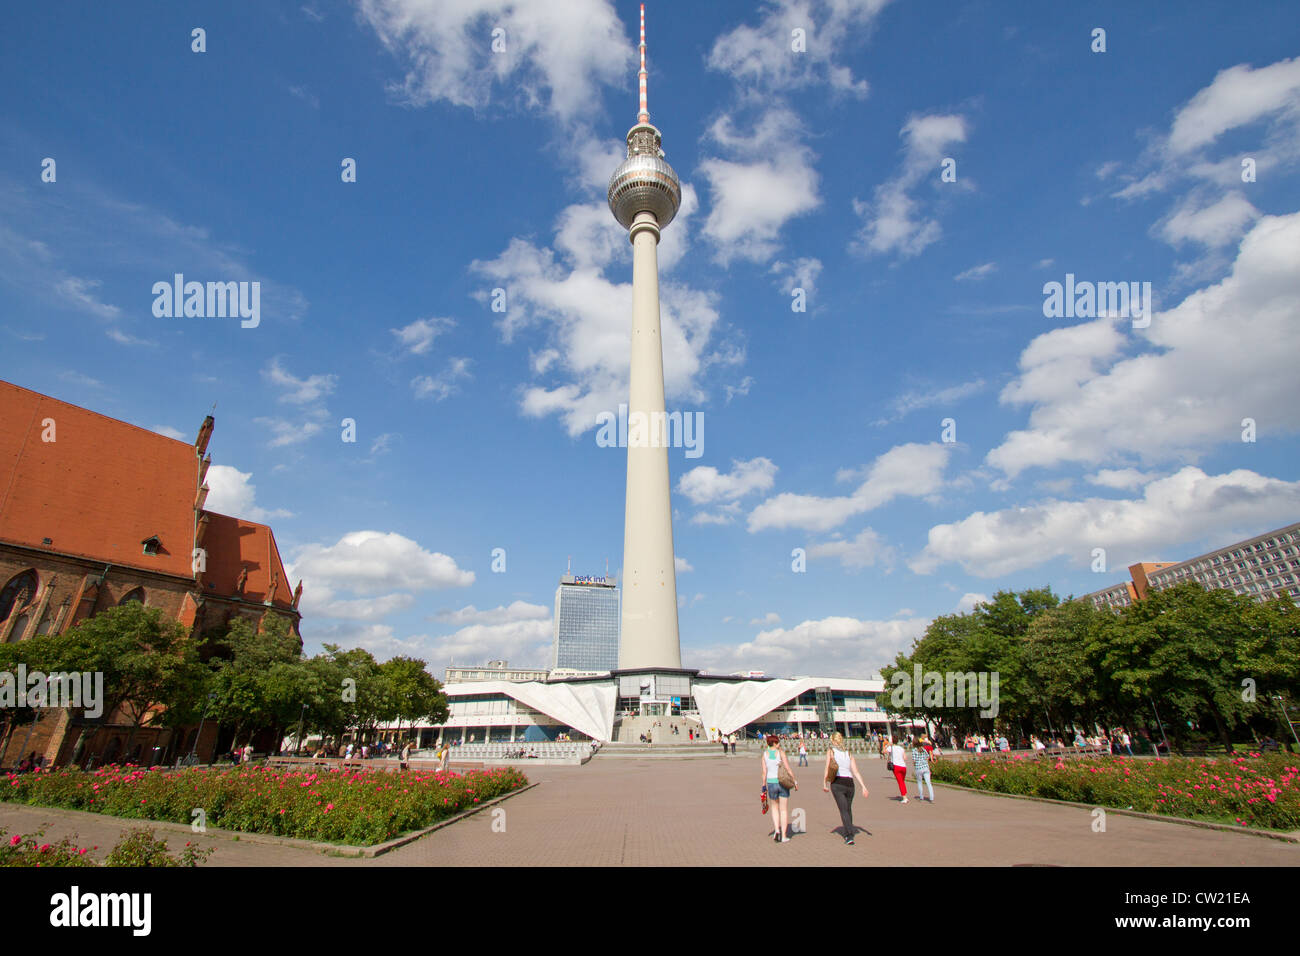 BERLIN, AUGUST 6: Panoramablick auf Berliner Fernsehturm oder Fernsehturm, Alexanderplatz, Deutschland am 6. August 2012. Stockfoto